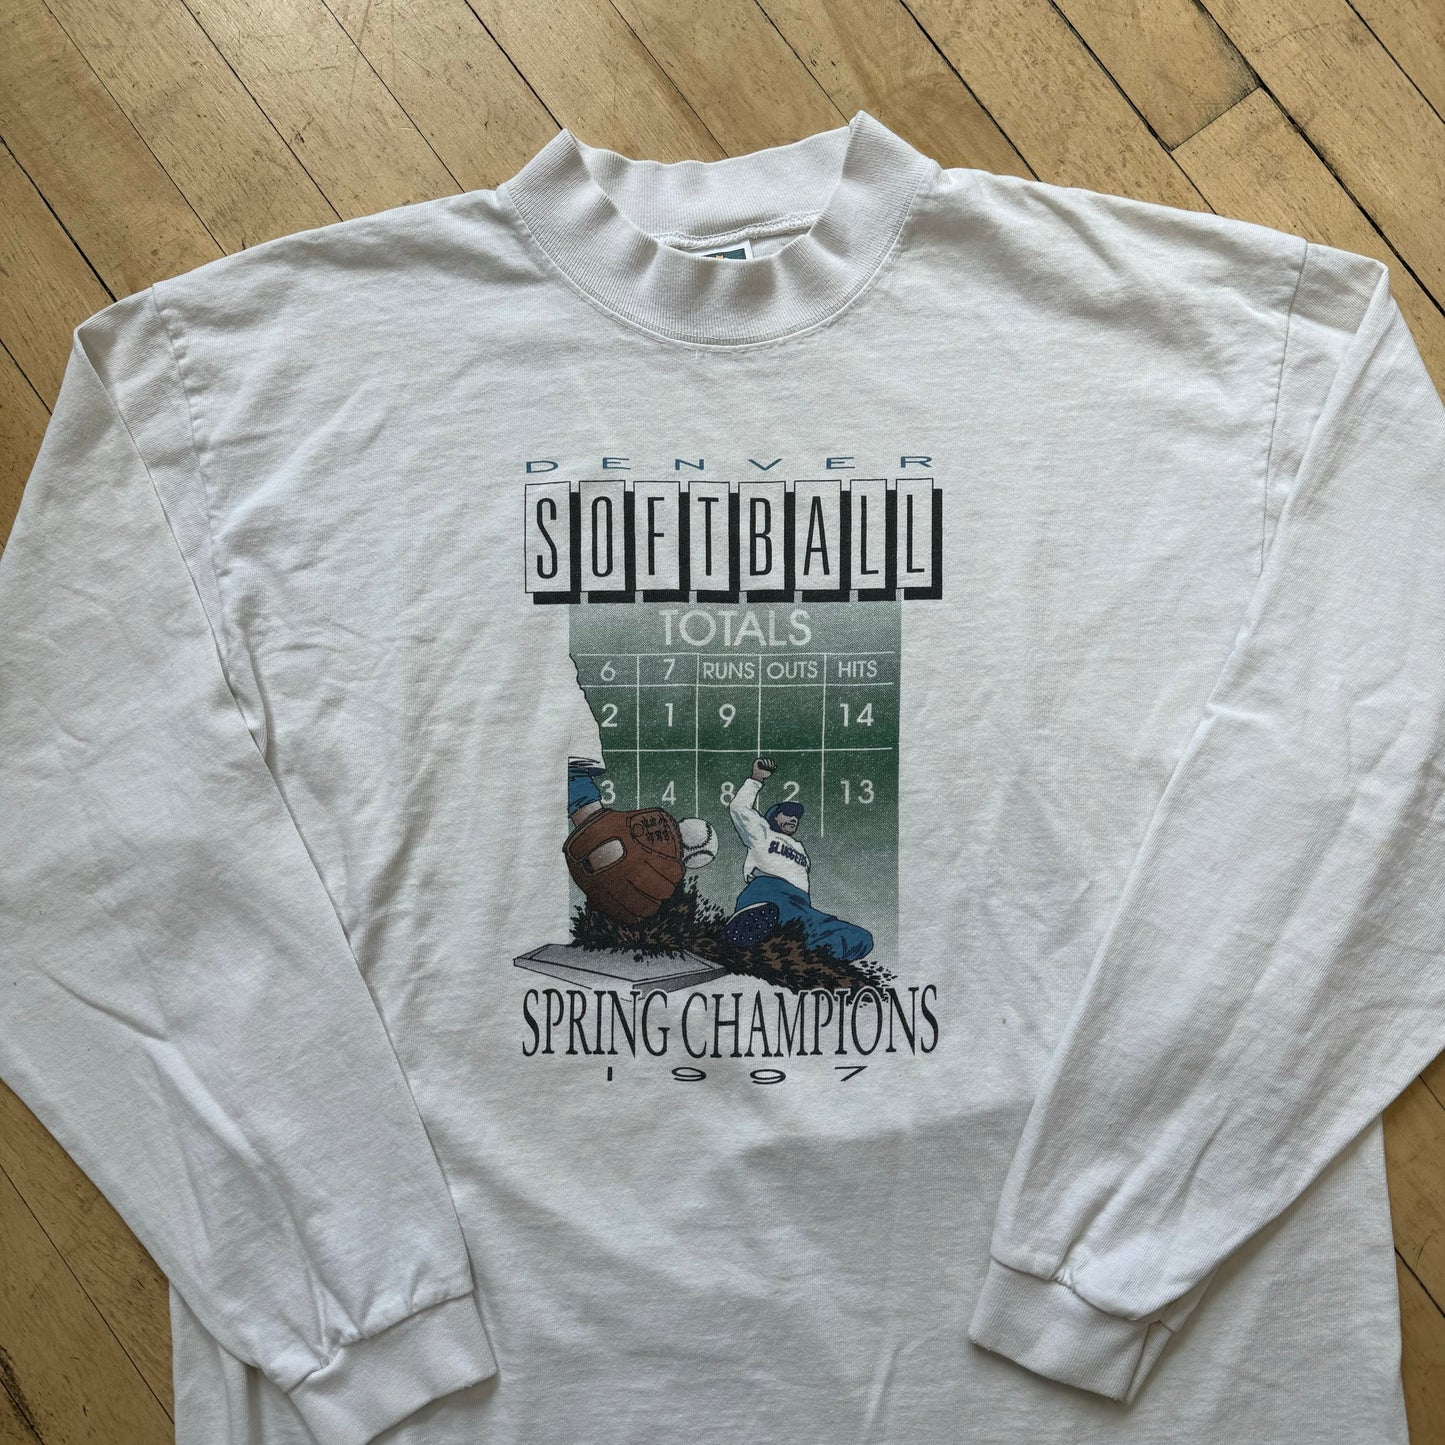 Vintage 97’ Denver Softball Champions Long Sleeve T-shirt Sz XL